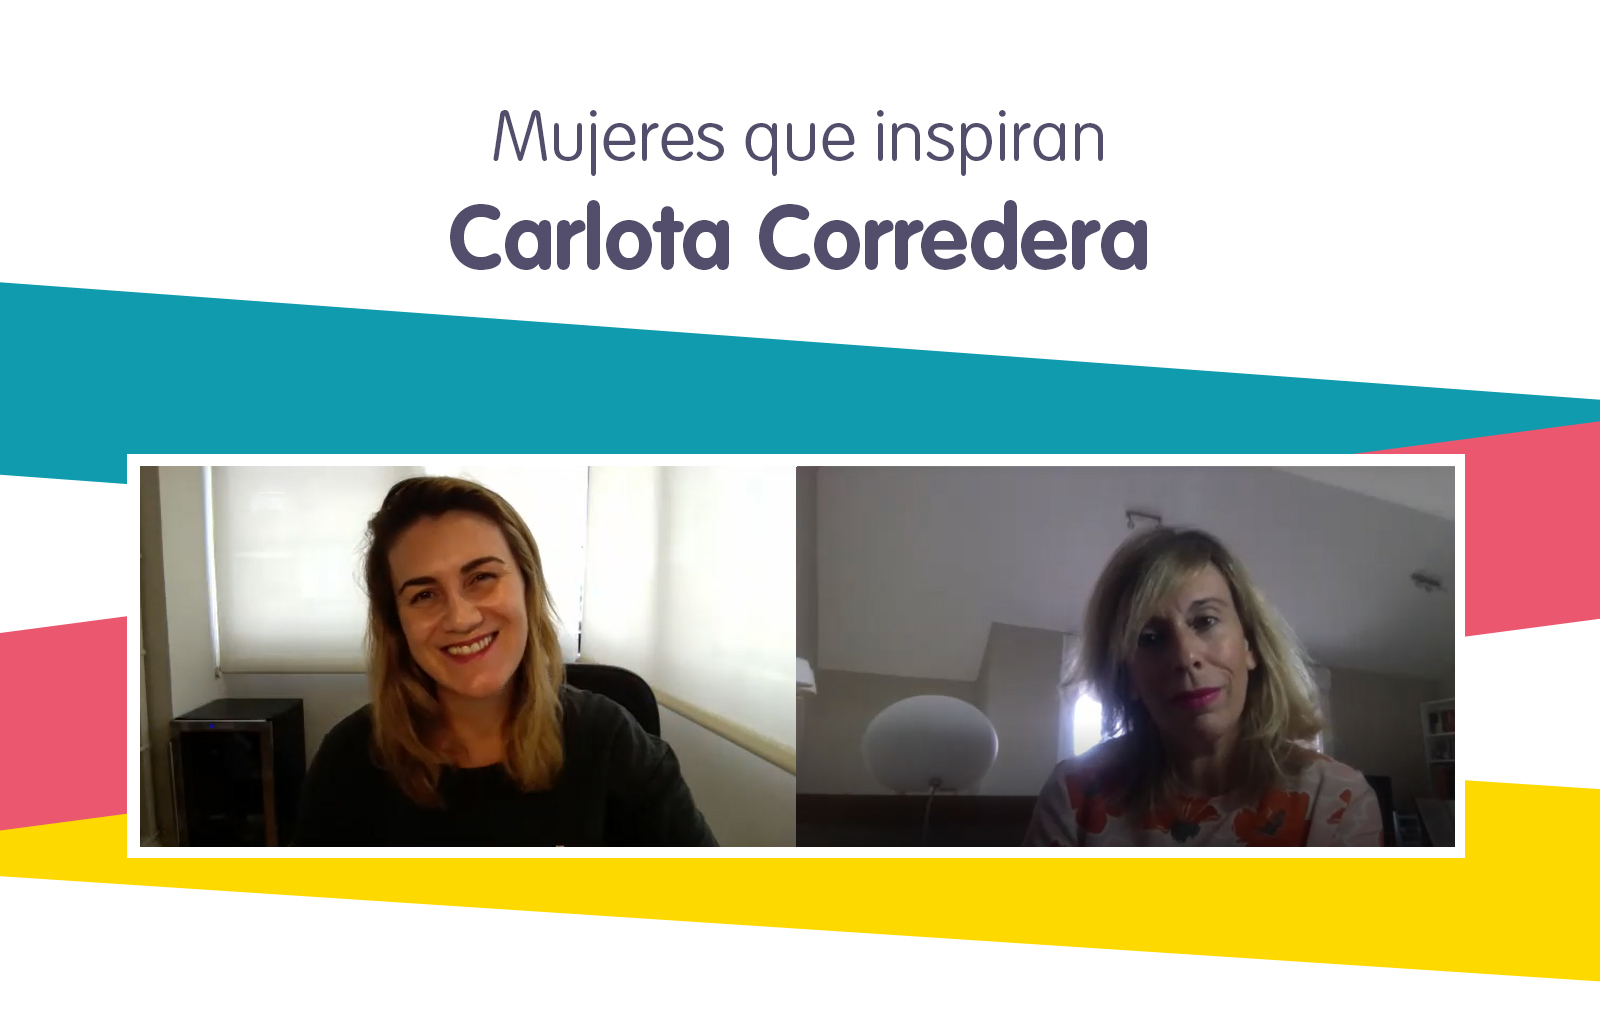 MUJERES QUE INSPIRAN – Carlota Corredera, Periodista